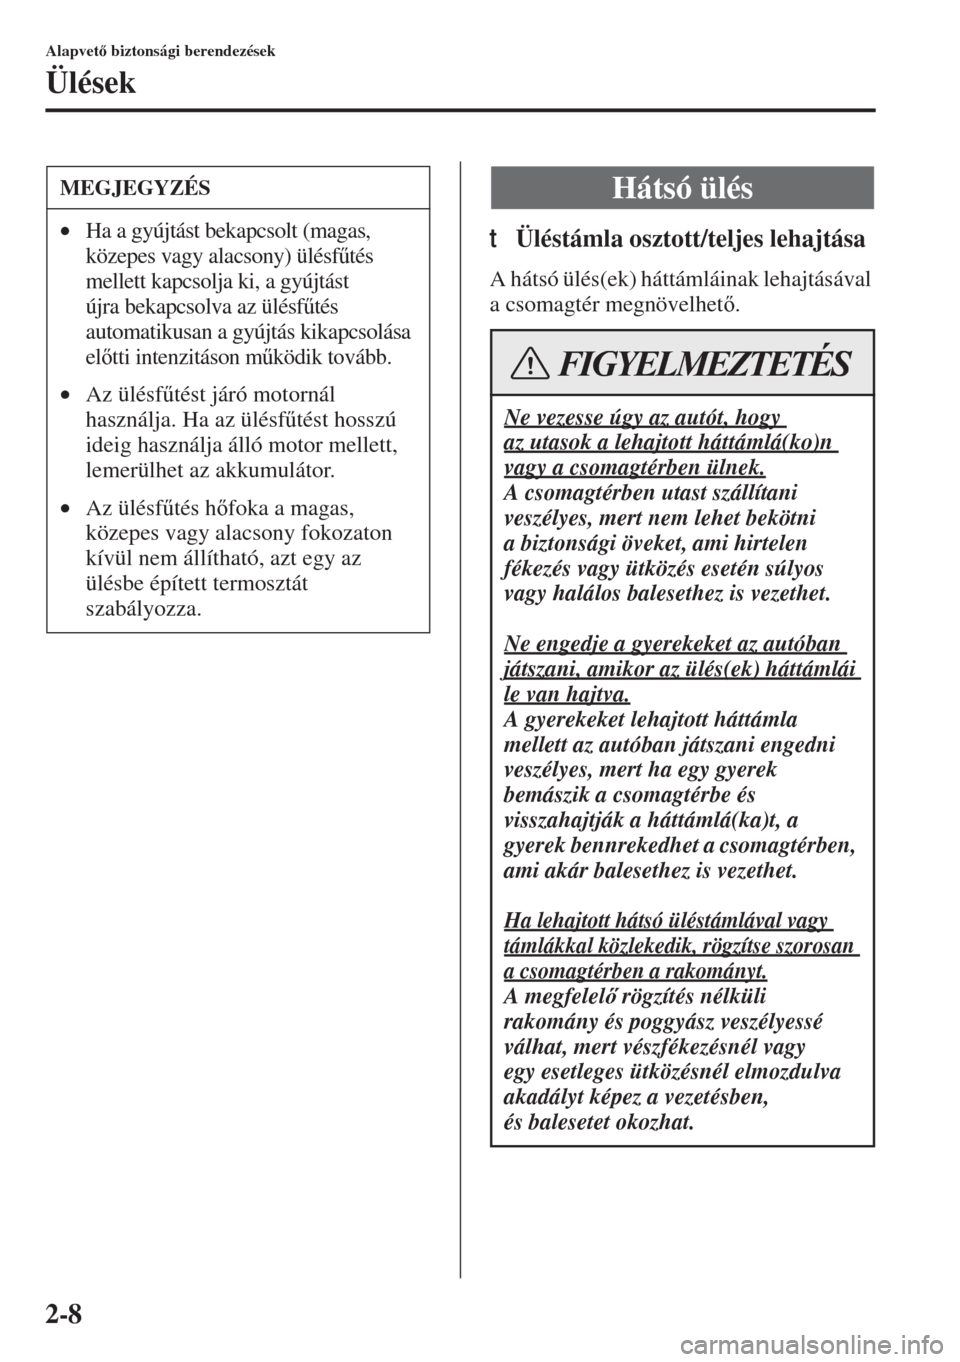 MAZDA MODEL 3 HATCHBACK 2015  Kezelési útmutató (in Hungarian) 2-8
Alapvet biztonsági berendezések
Ülések
.
tÜléstámla osztott/teljes lehajtása
A hátsó ülés(ek) háttámláinak lehajtásával 
a csomagtér megnövelhet.
MEGJEGYZÉS
•Ha a gyújt�